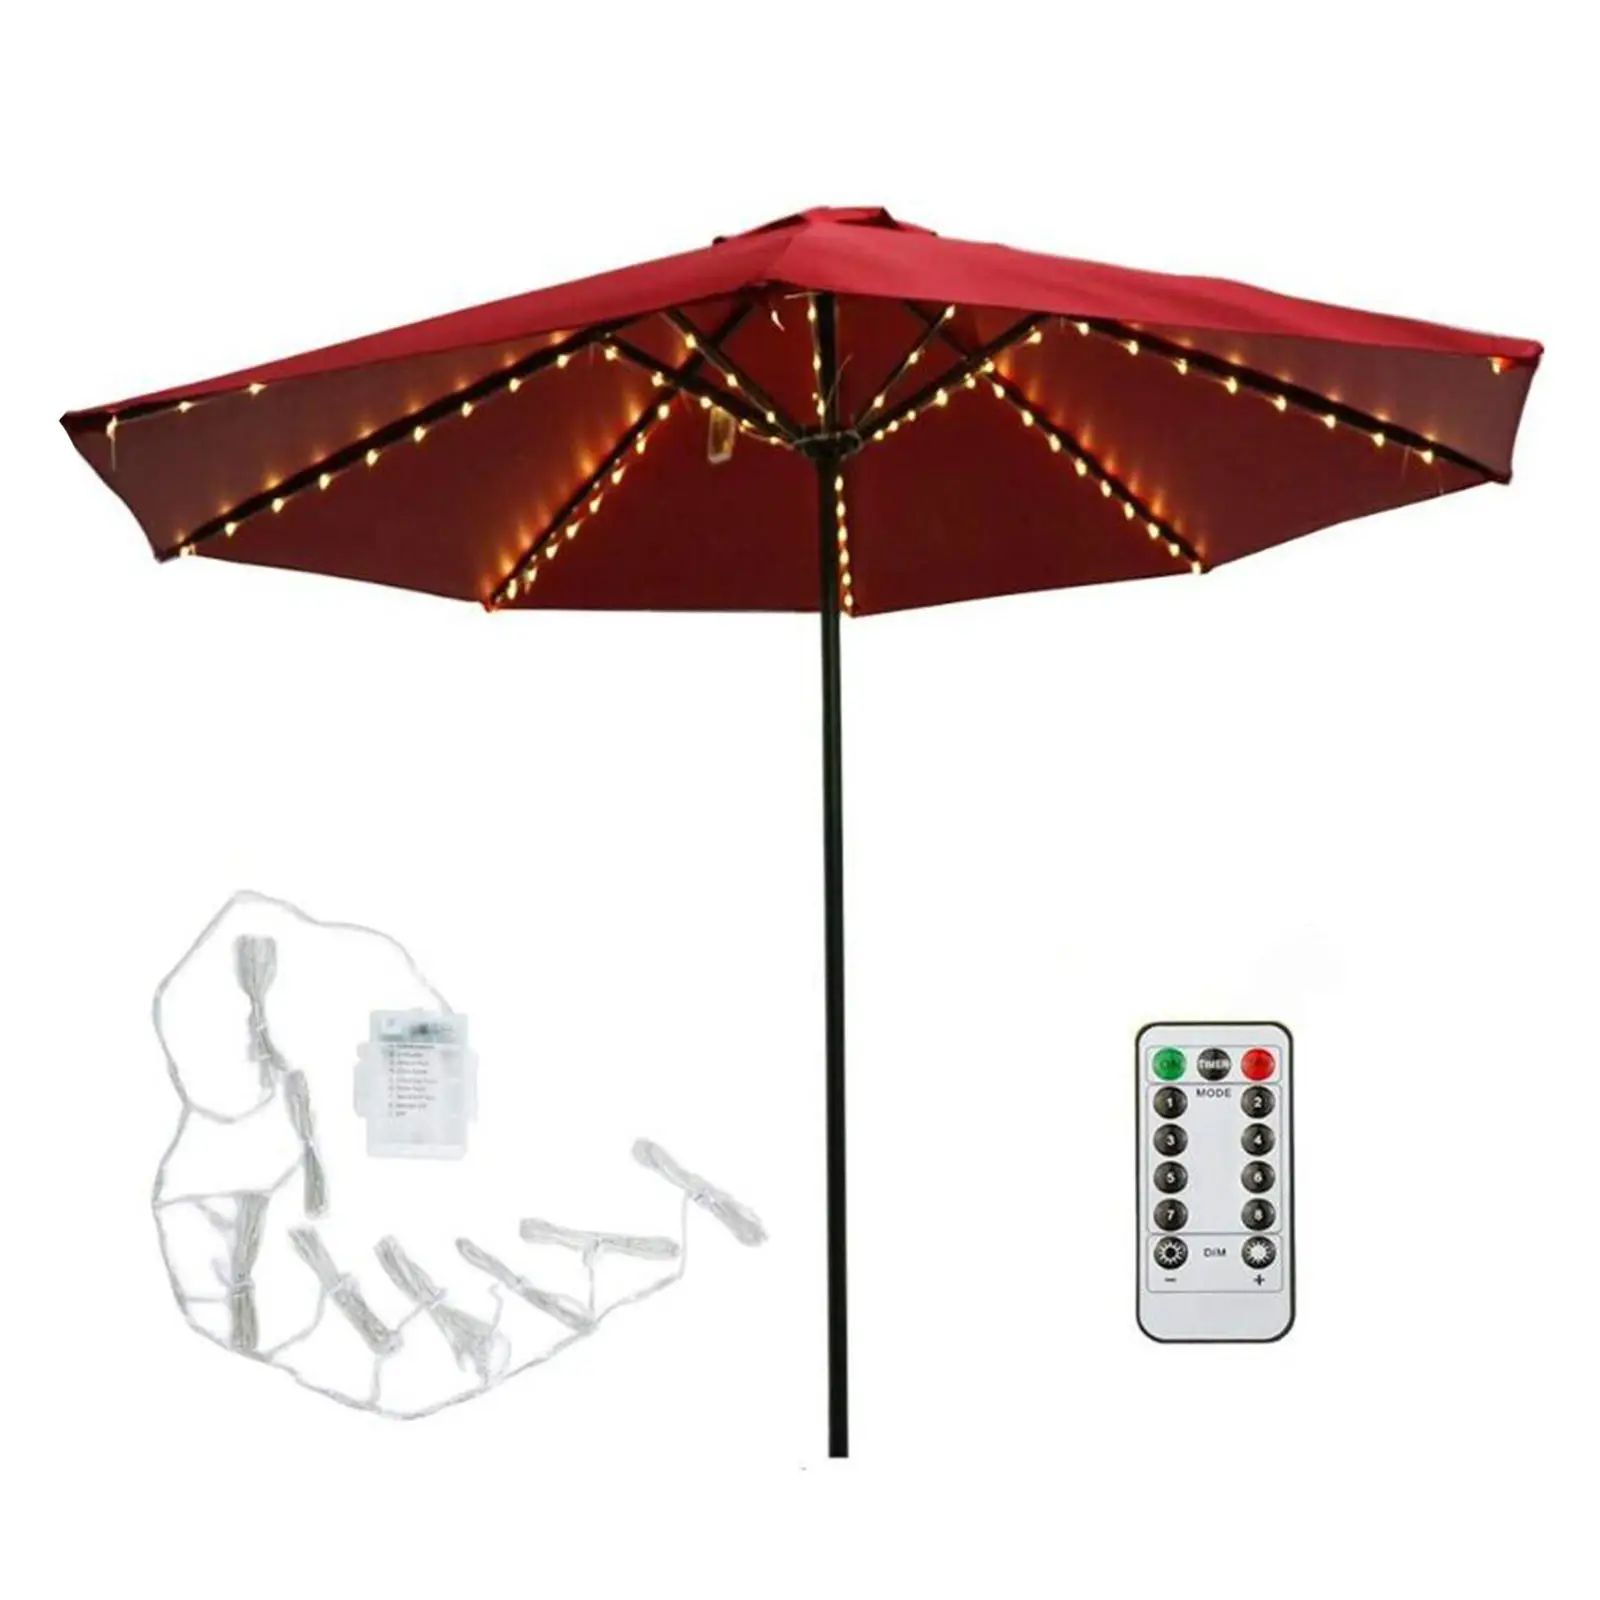 104 LED Umbrella Parasol String Light Battery Operated 8 Brightness Mode Waterproof Tents Umbrella Pole Light + Remote Control